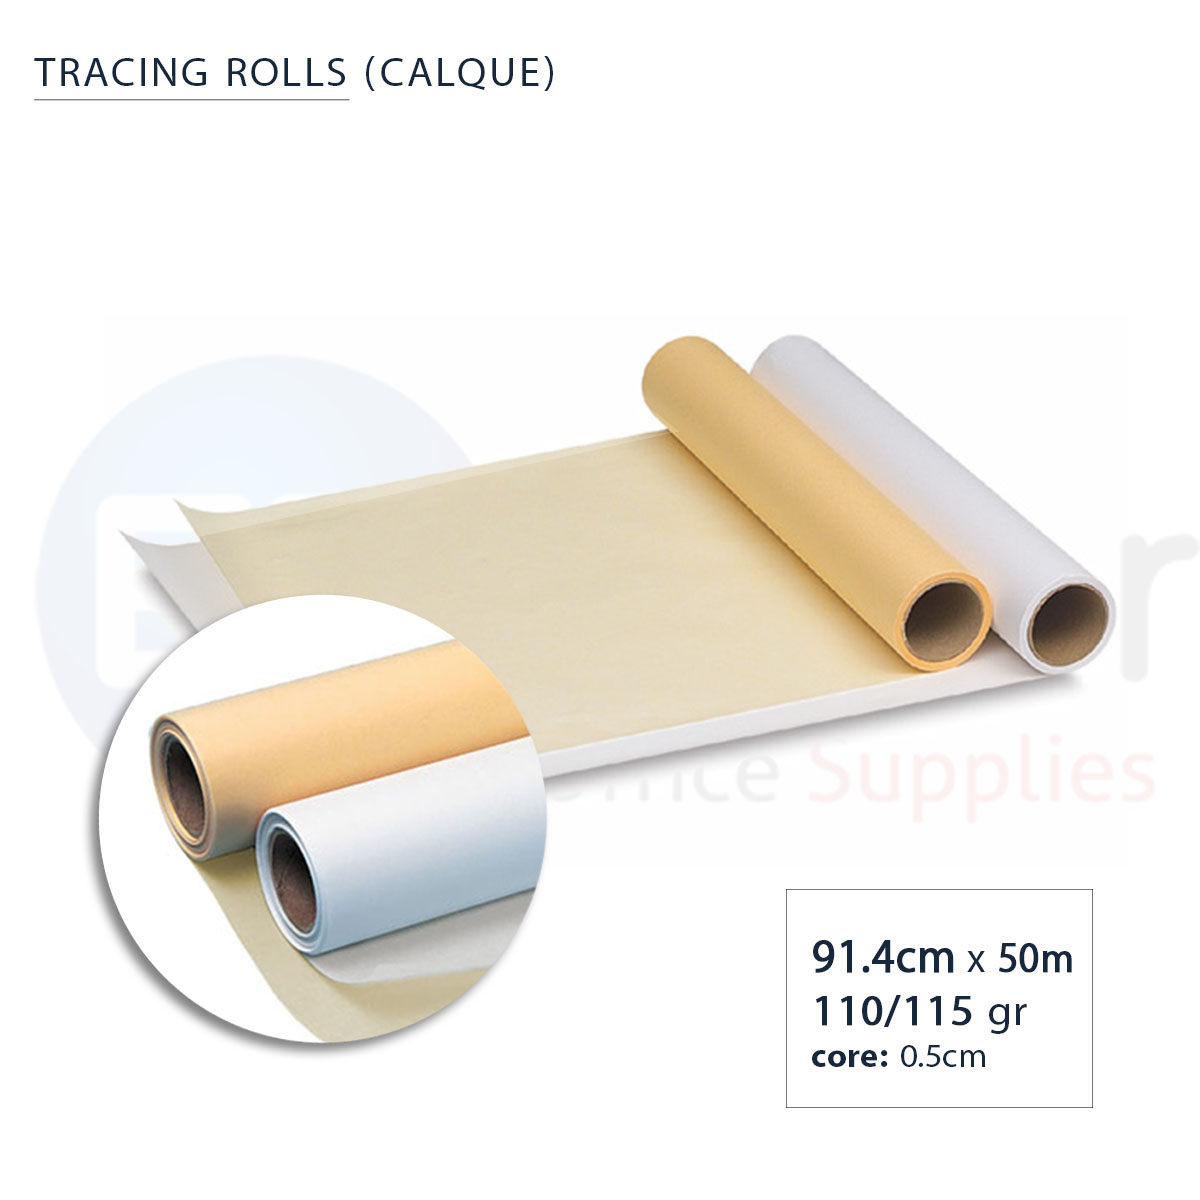 Calq plotter roll,110gr(91.4x50m)Core 5cm